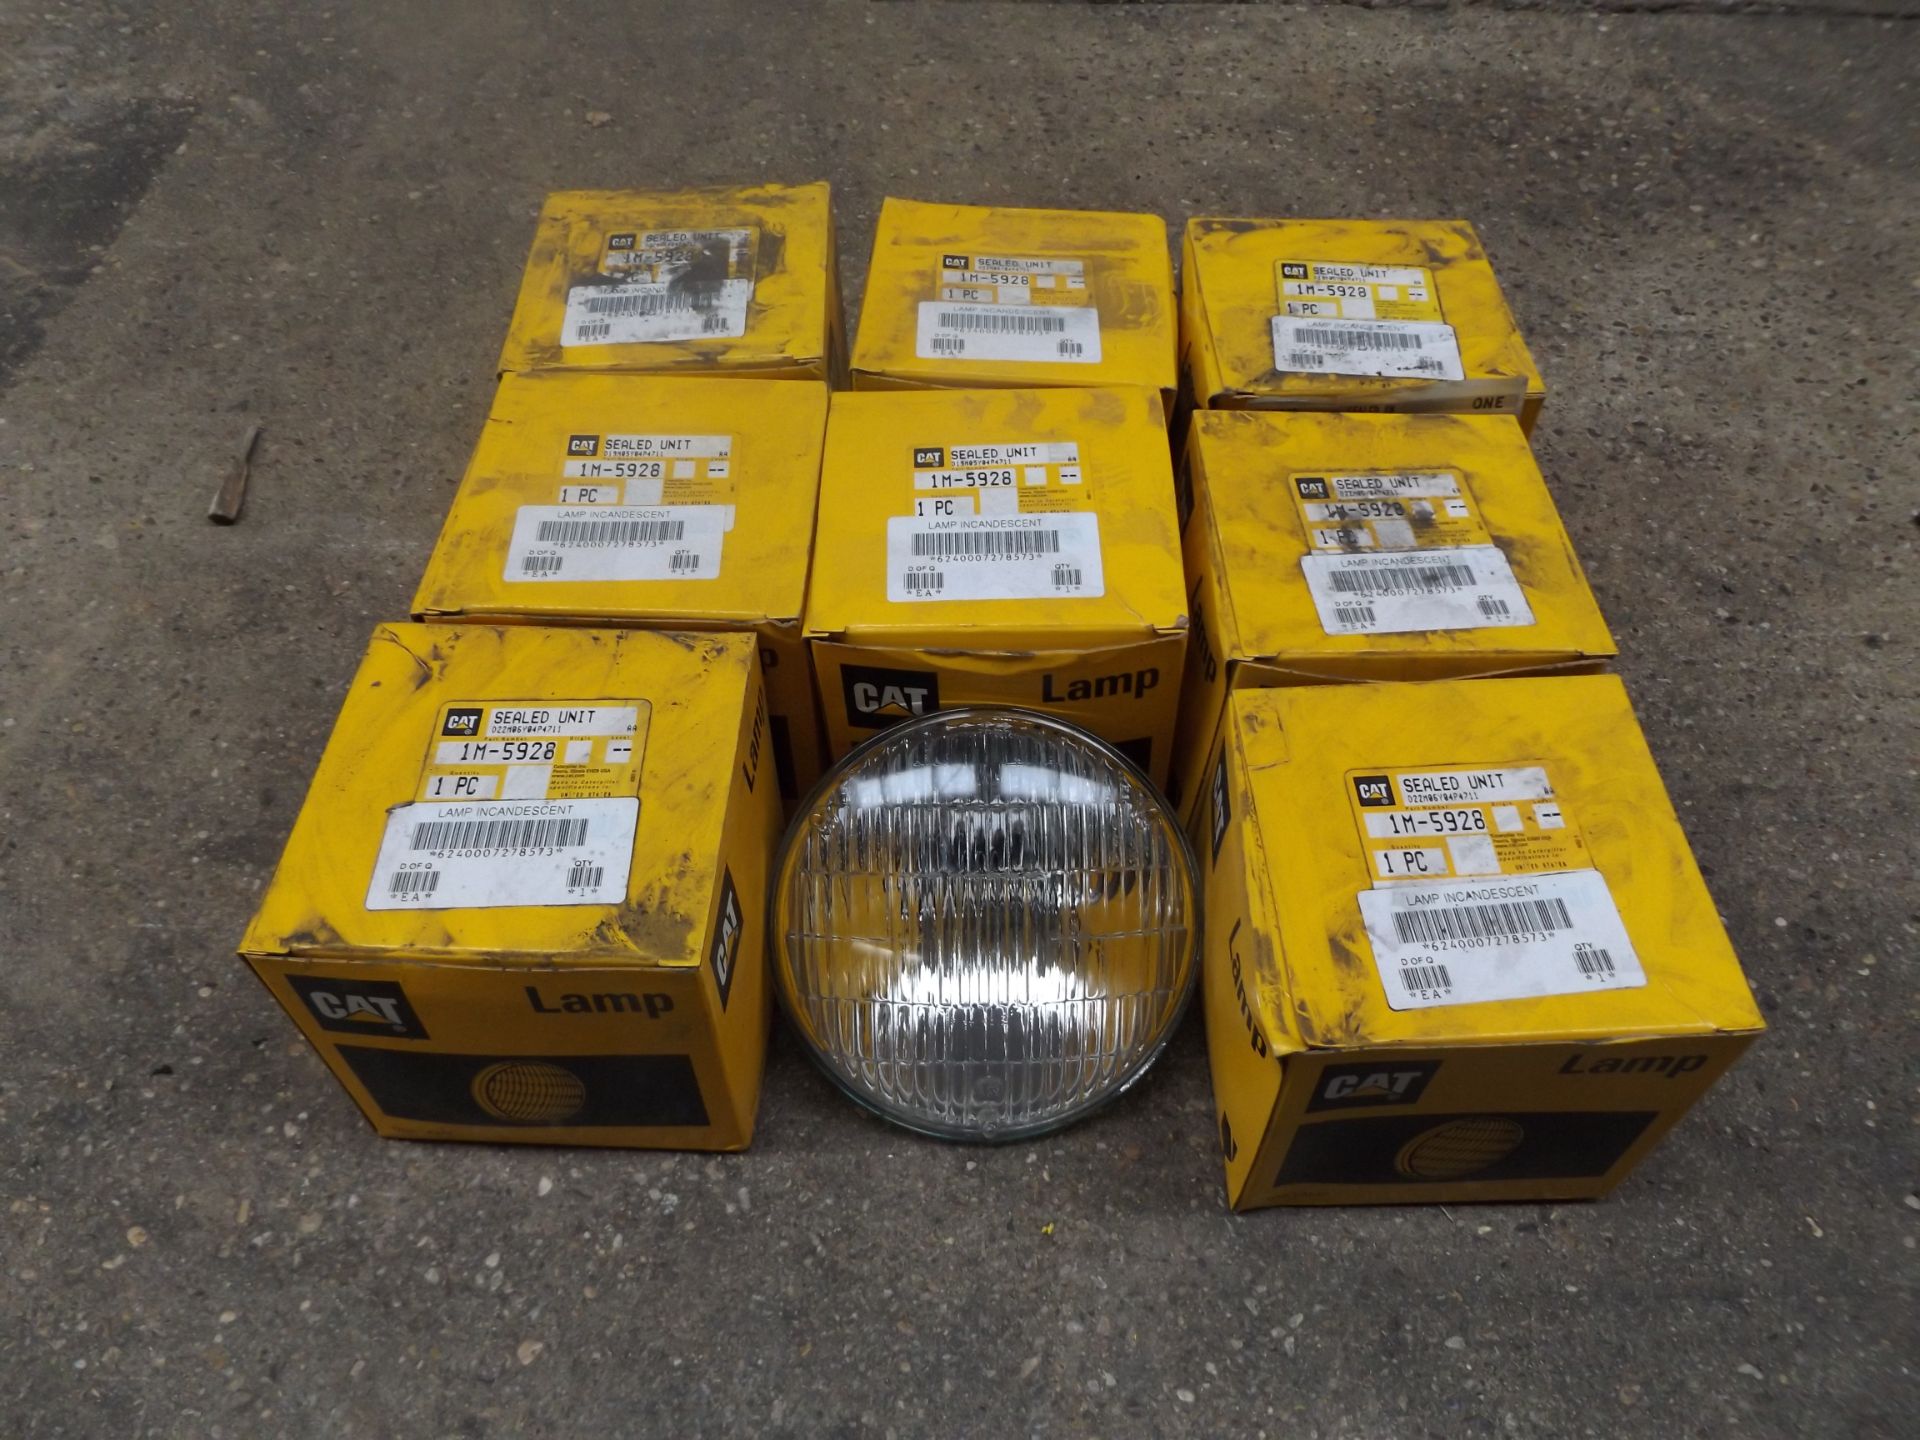 8 x Caterpillar Sealed Lamp Units P/No 1M-5928